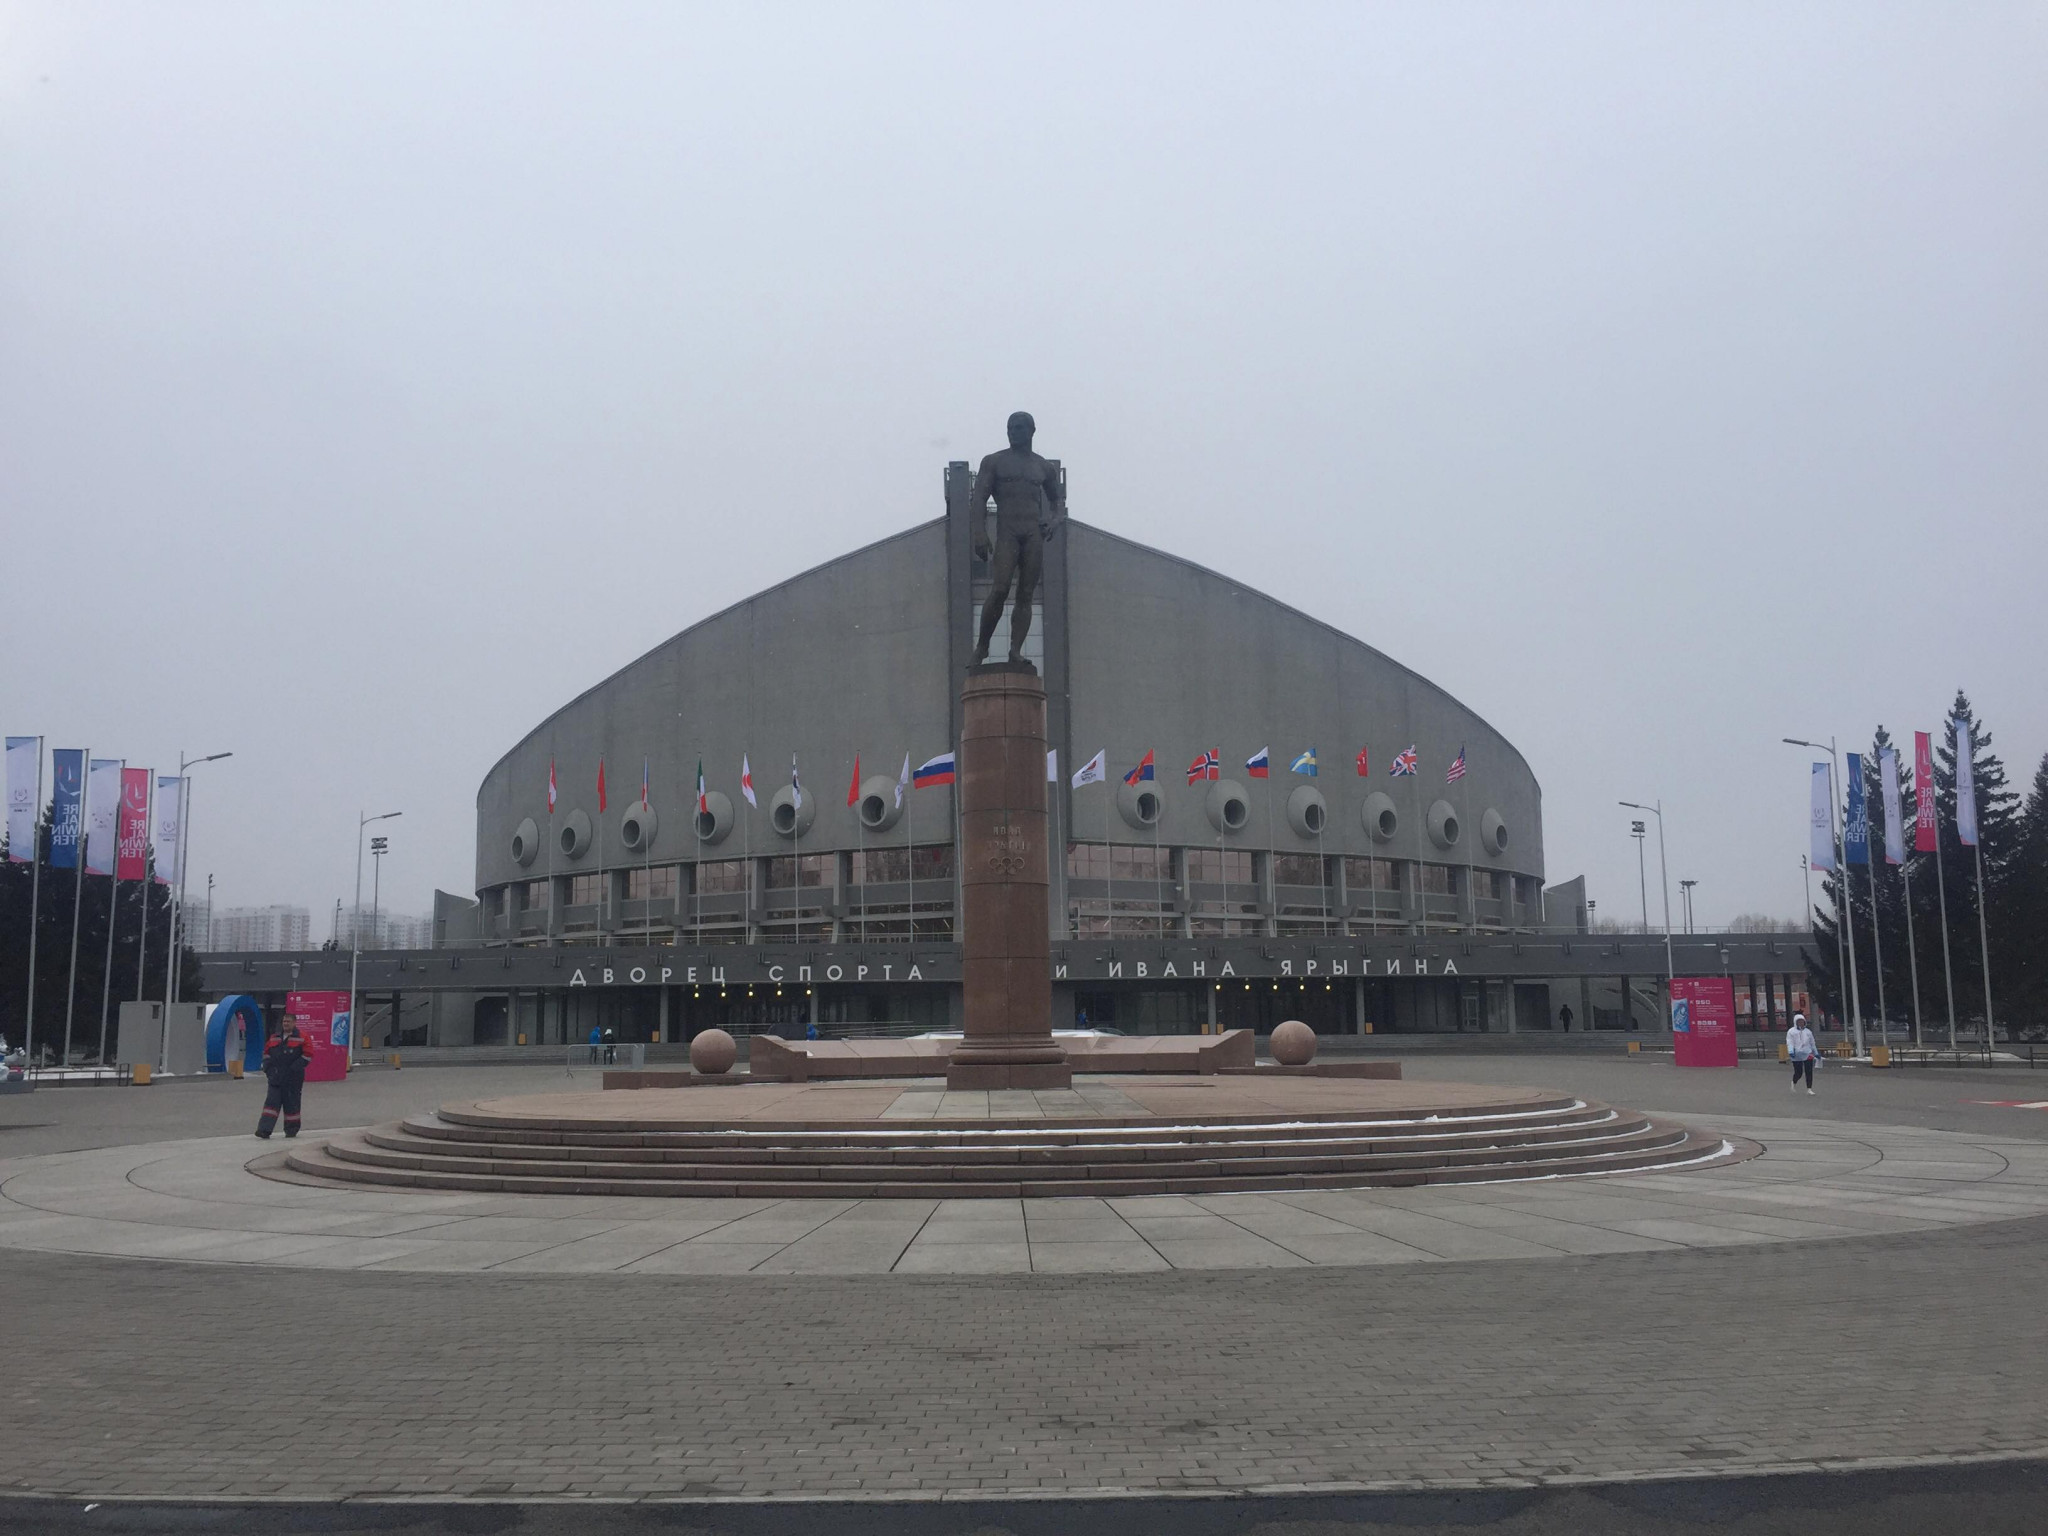 Krasnoyarsk will bid to host the 2022 World Wrestling Championships at the Ivan Yarygin Sports Palace ©ITG